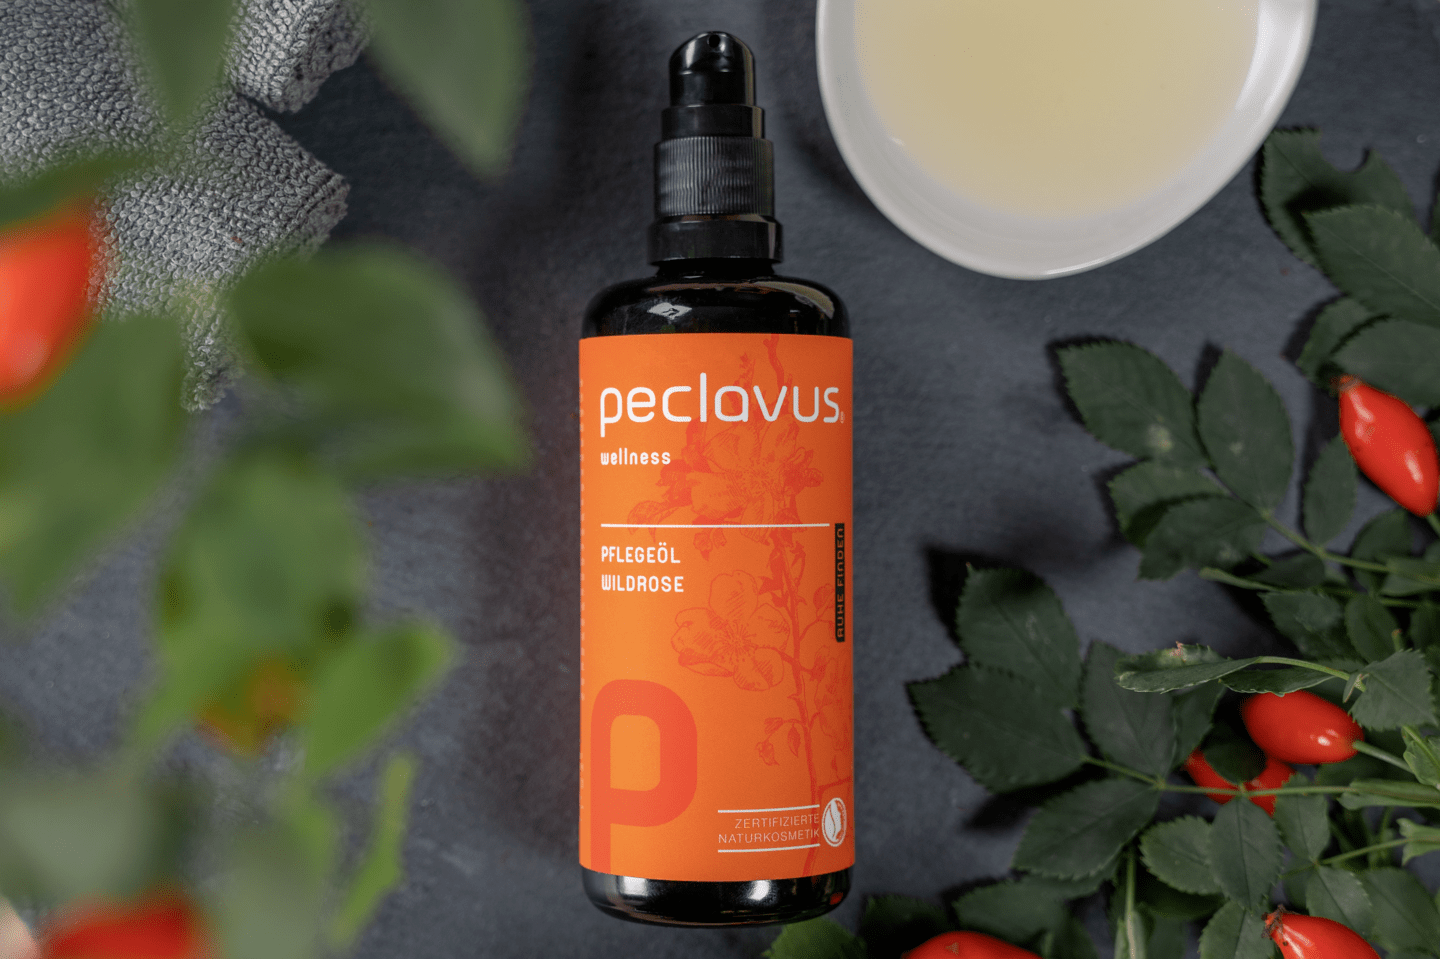 peclavus - Pflegeöl Wildrose, 100 ml